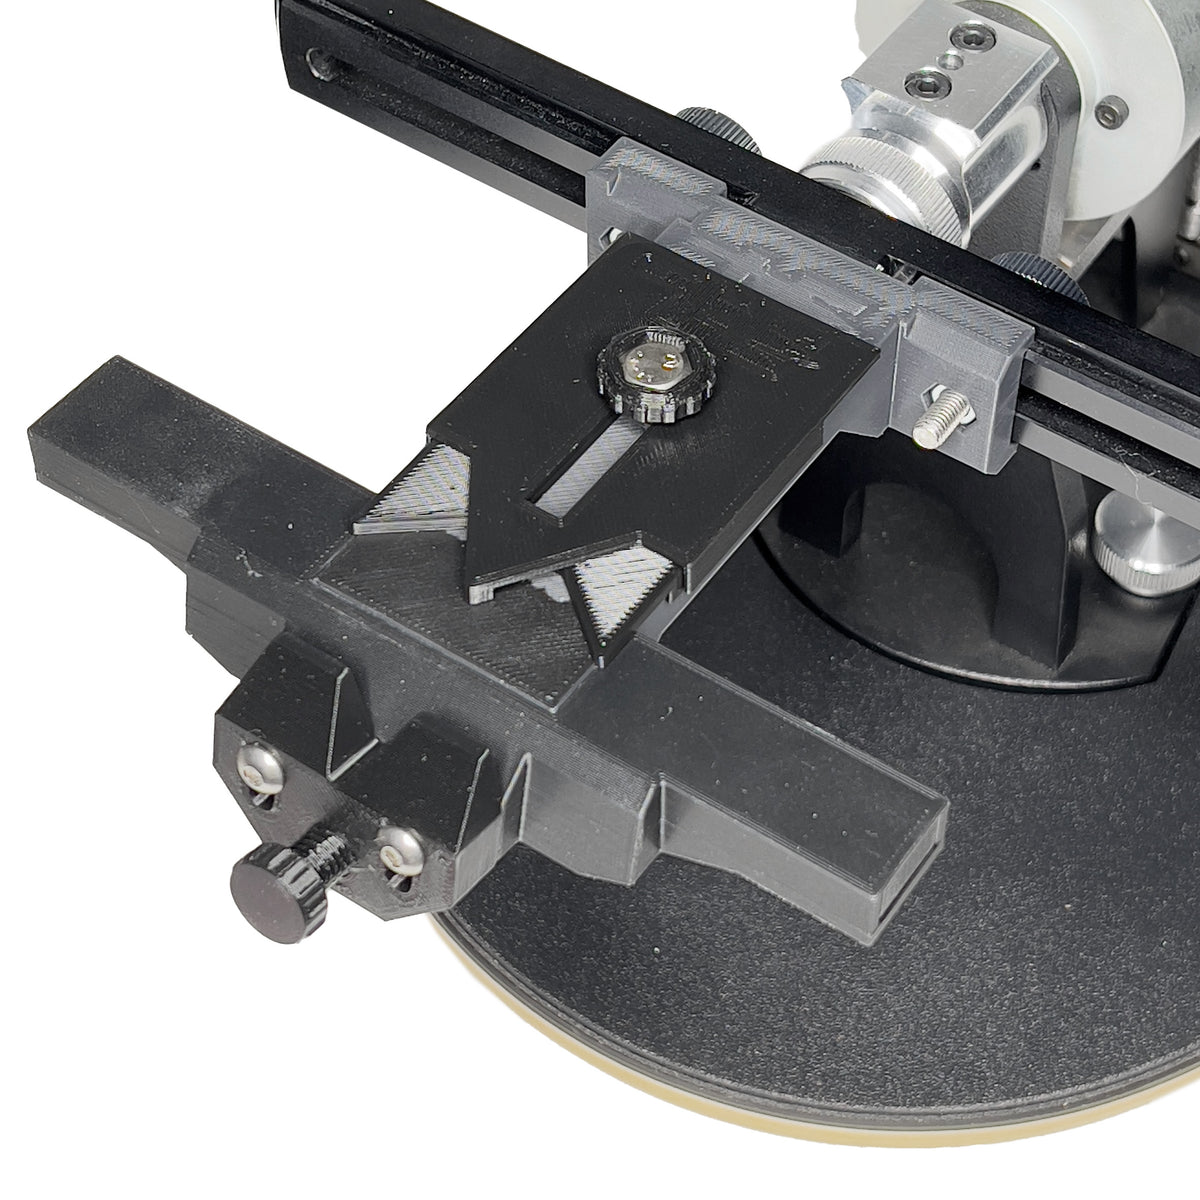  TSPROF Kadet Nero Sharpening Kit : Tools & Home Improvement